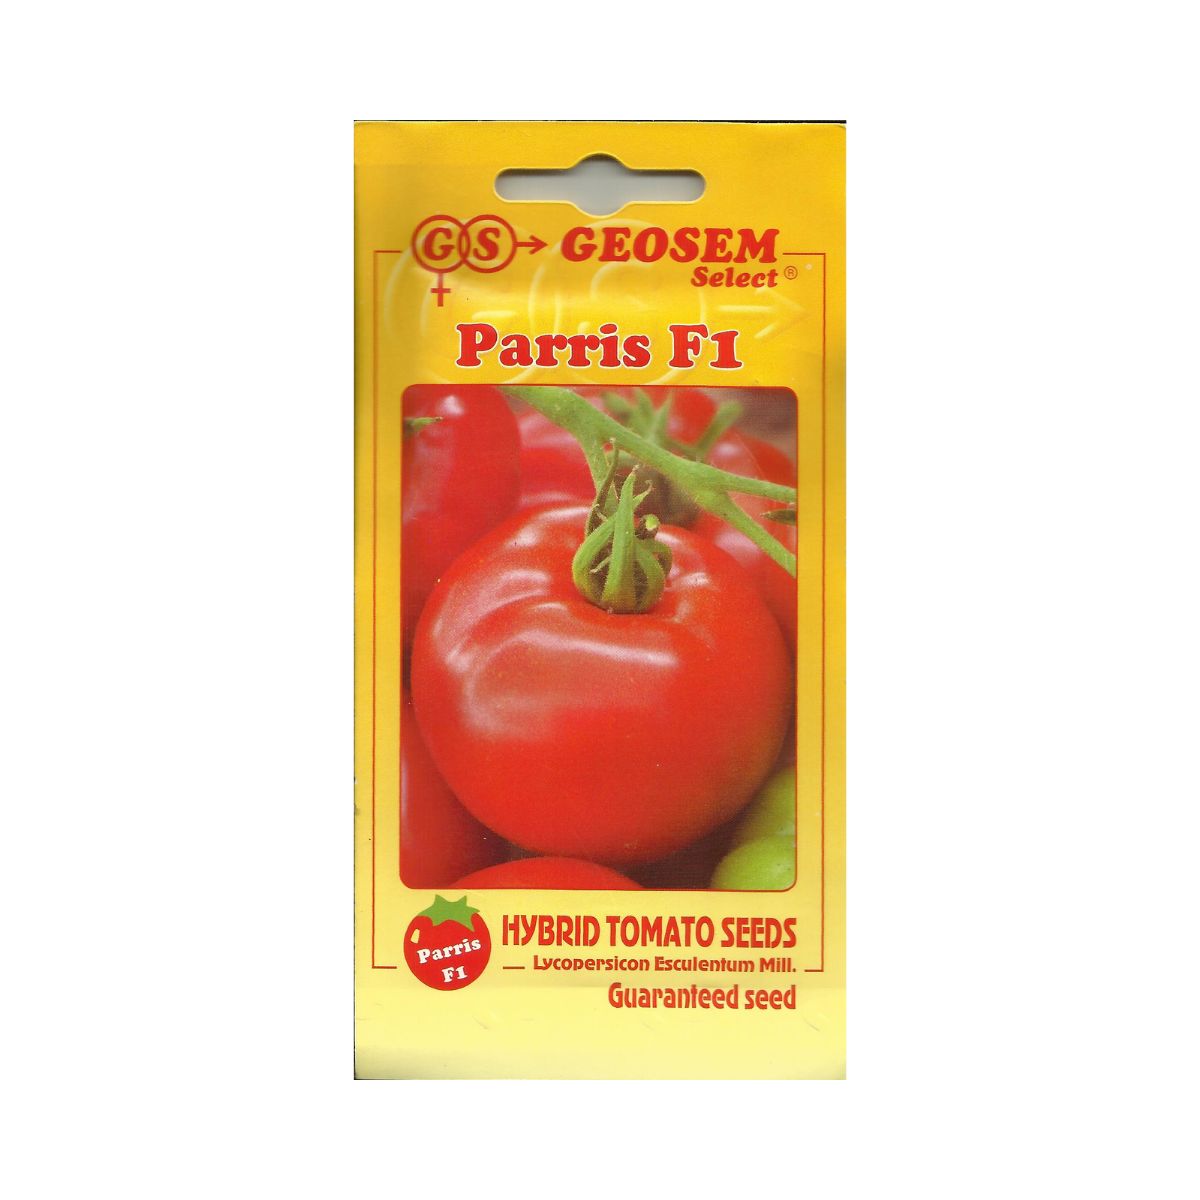 Tomate - Seminte Tomate extra-timpurii PARRIS F1 GeosemSelect 250 sem, hectarul.ro